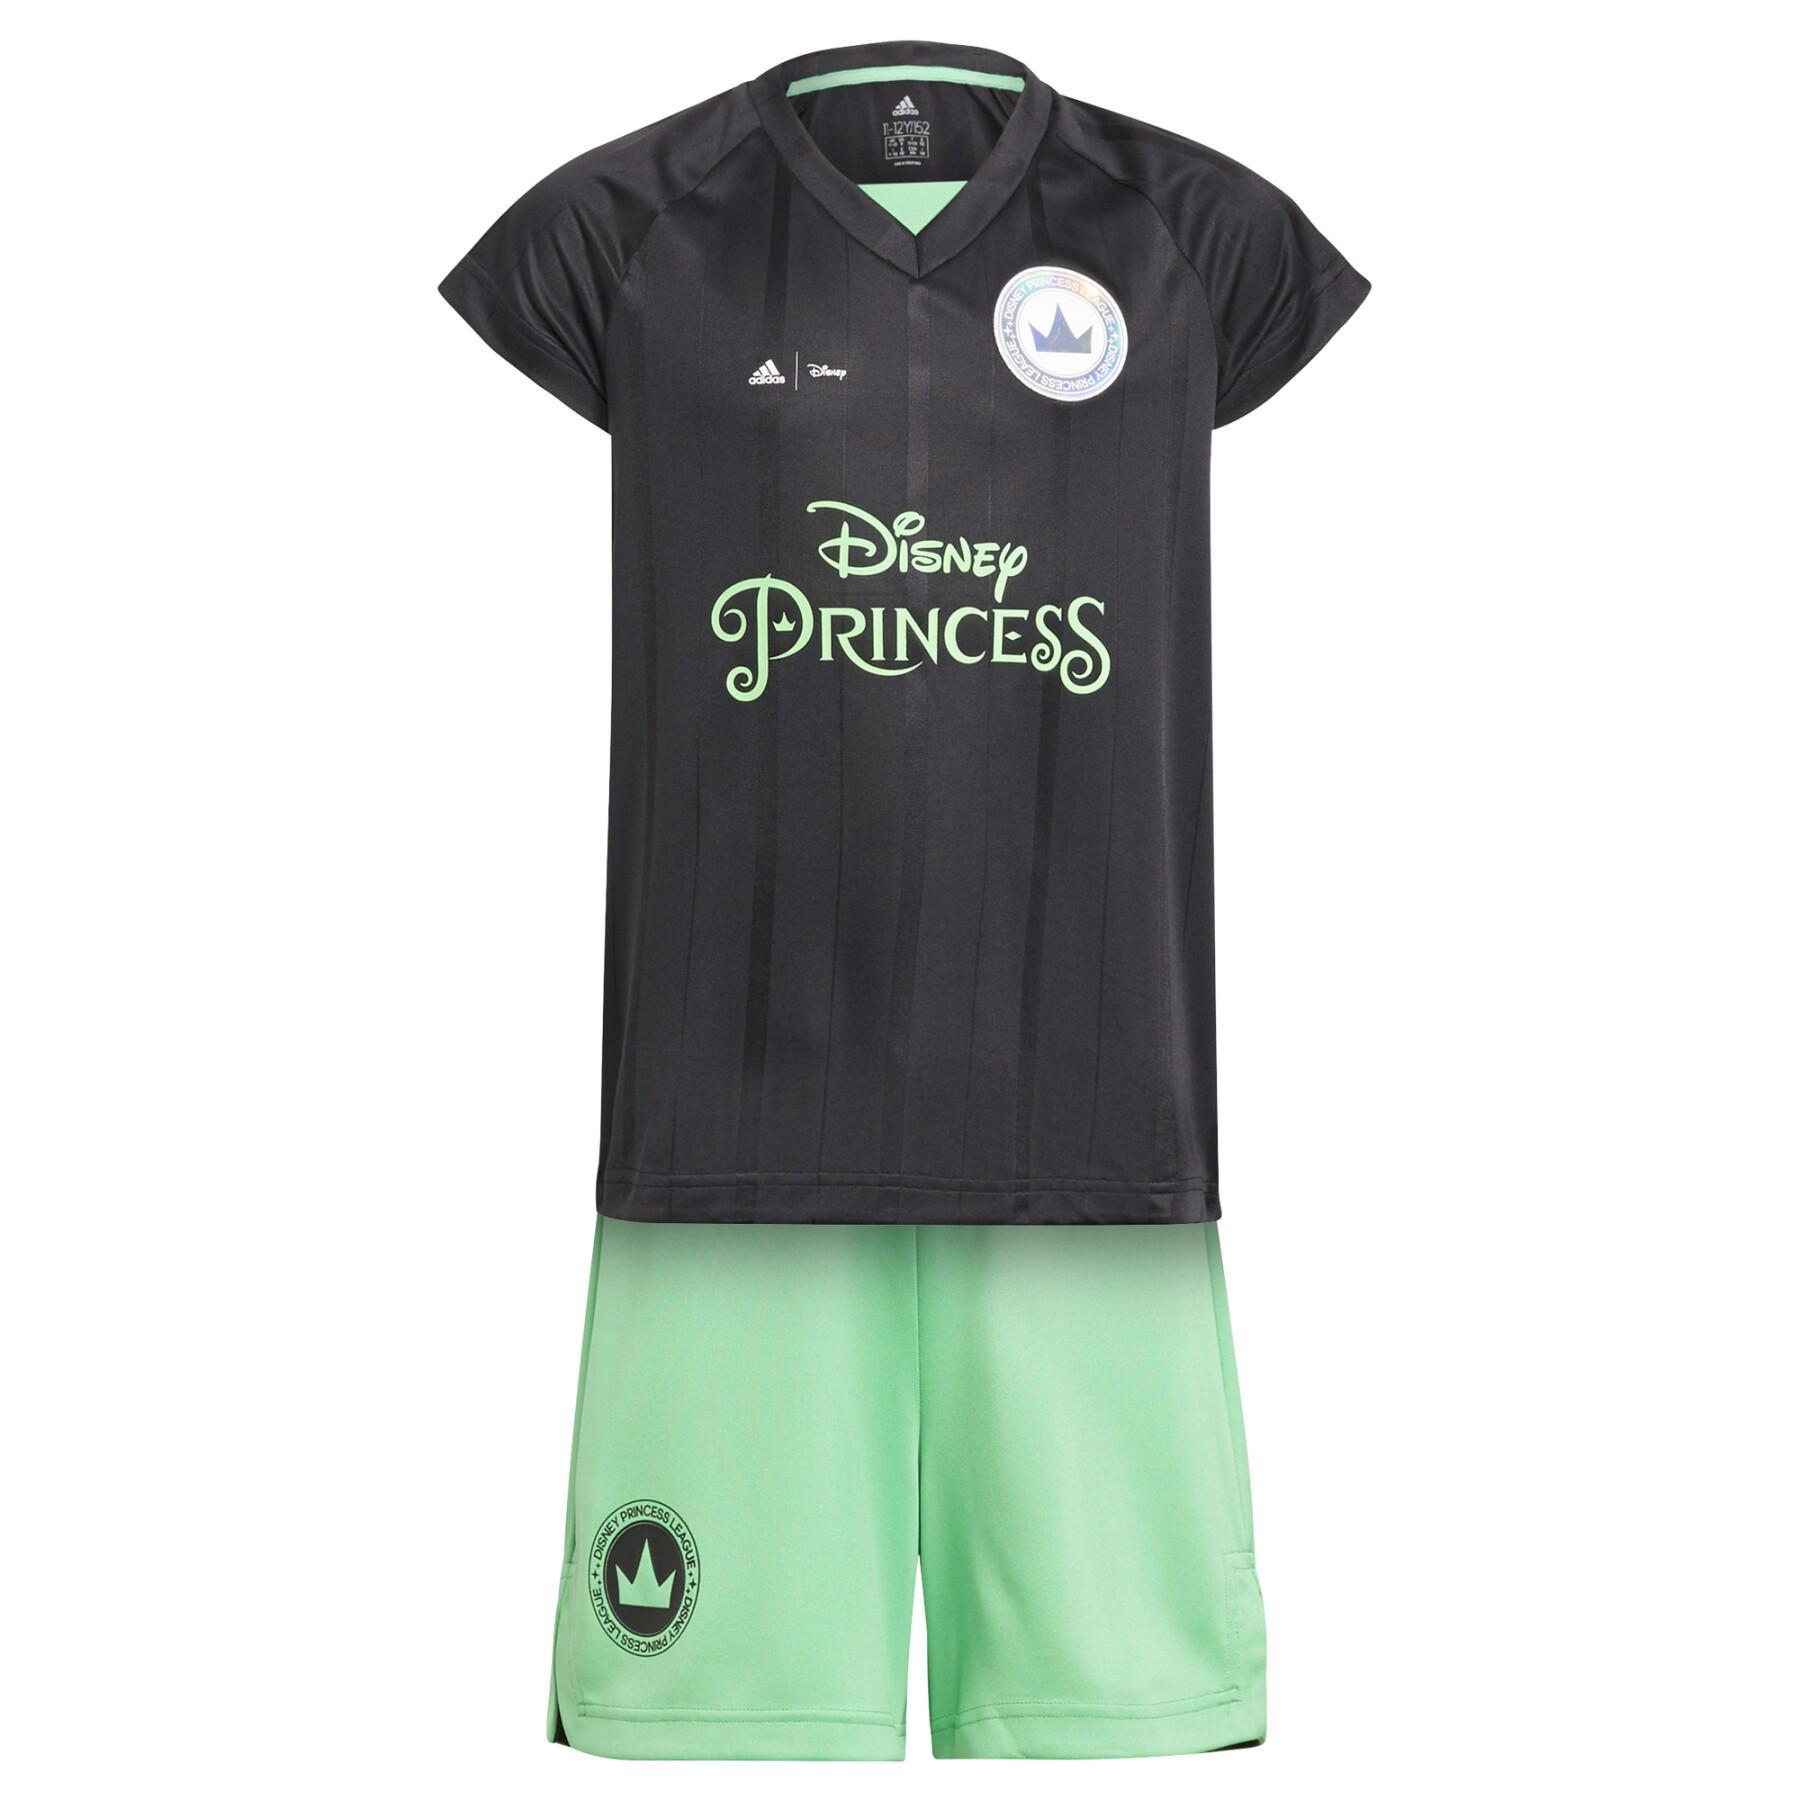 Knipoog Stevig handel Survêtement enfant adidas Disney Princesses Football - adidas - Survêtements  d'entraînement - Enfants